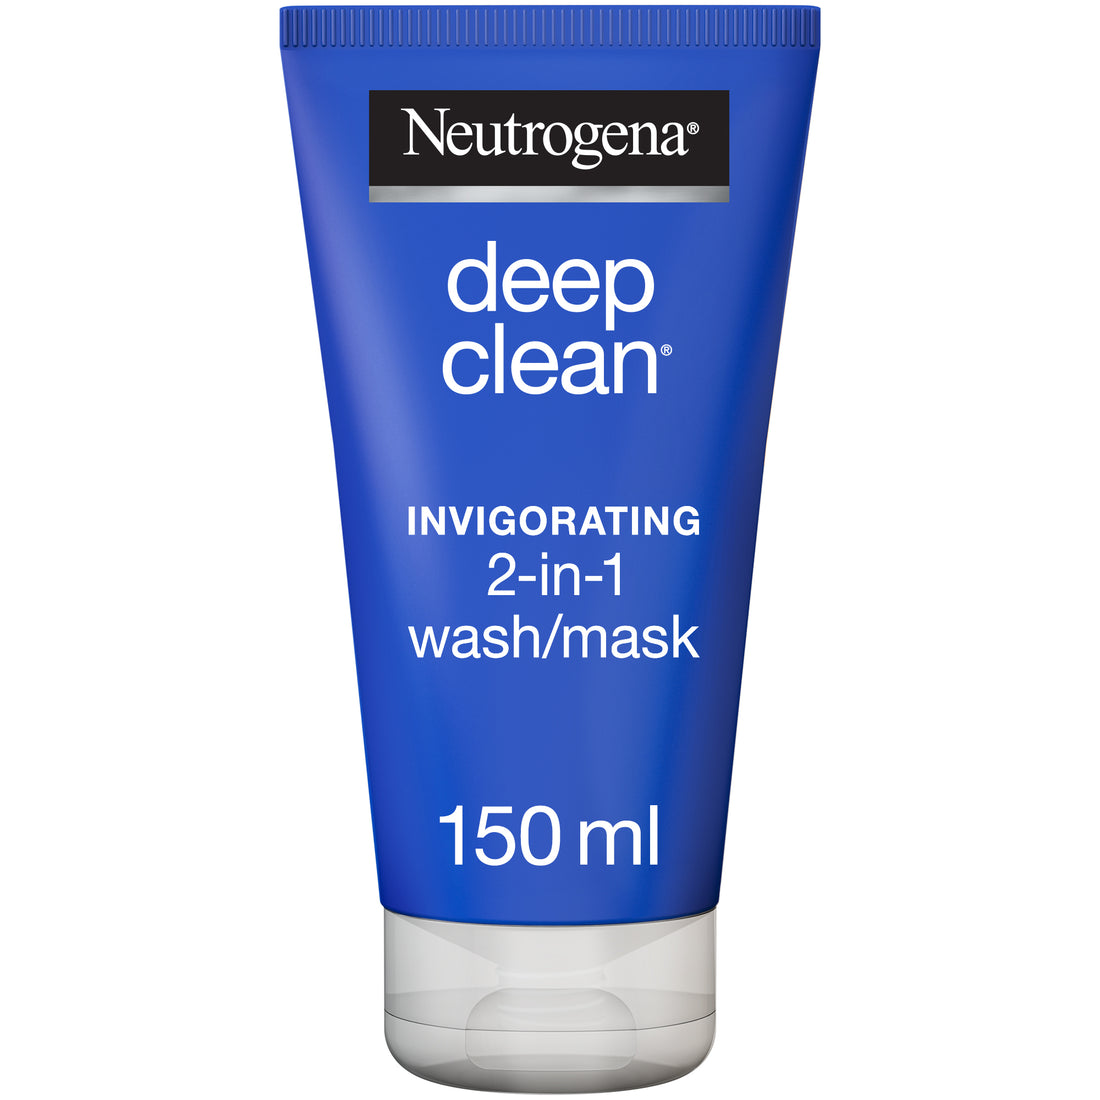 Neutrogena, Facial Wash, Deep Clean, Invigorating 2-in-1 Wash/Mask, 150ml